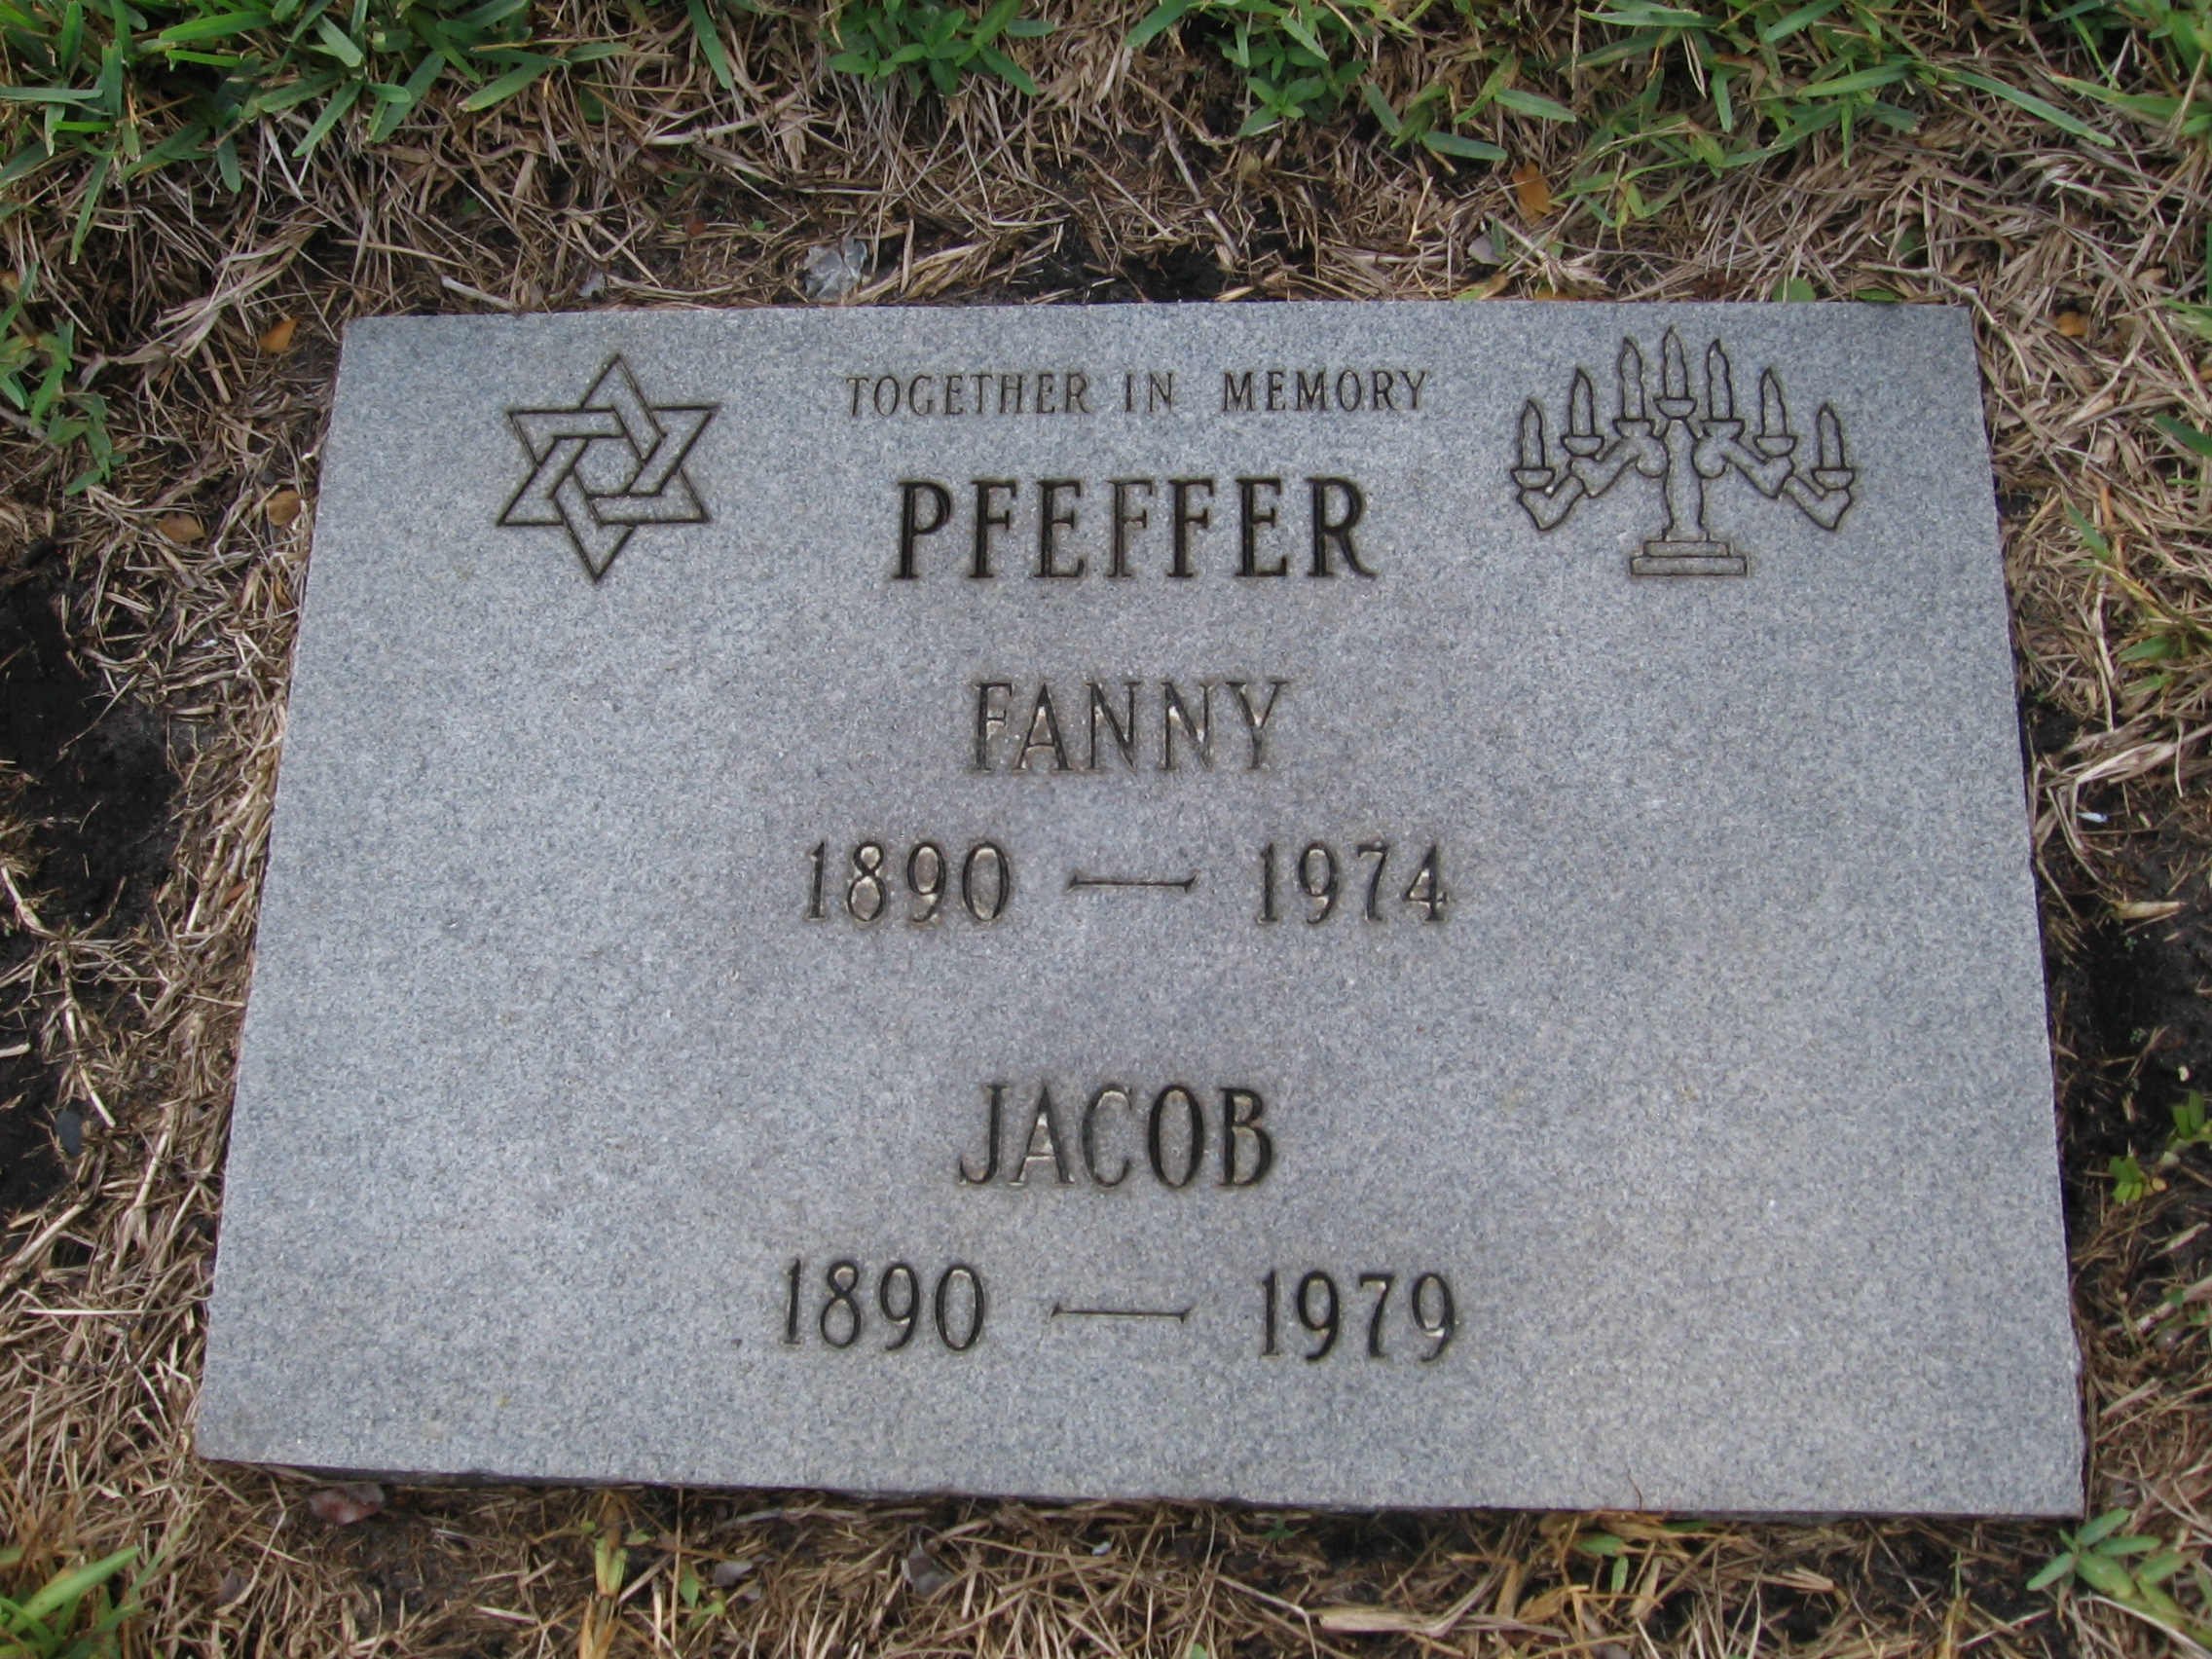 Jacob Pfeffer